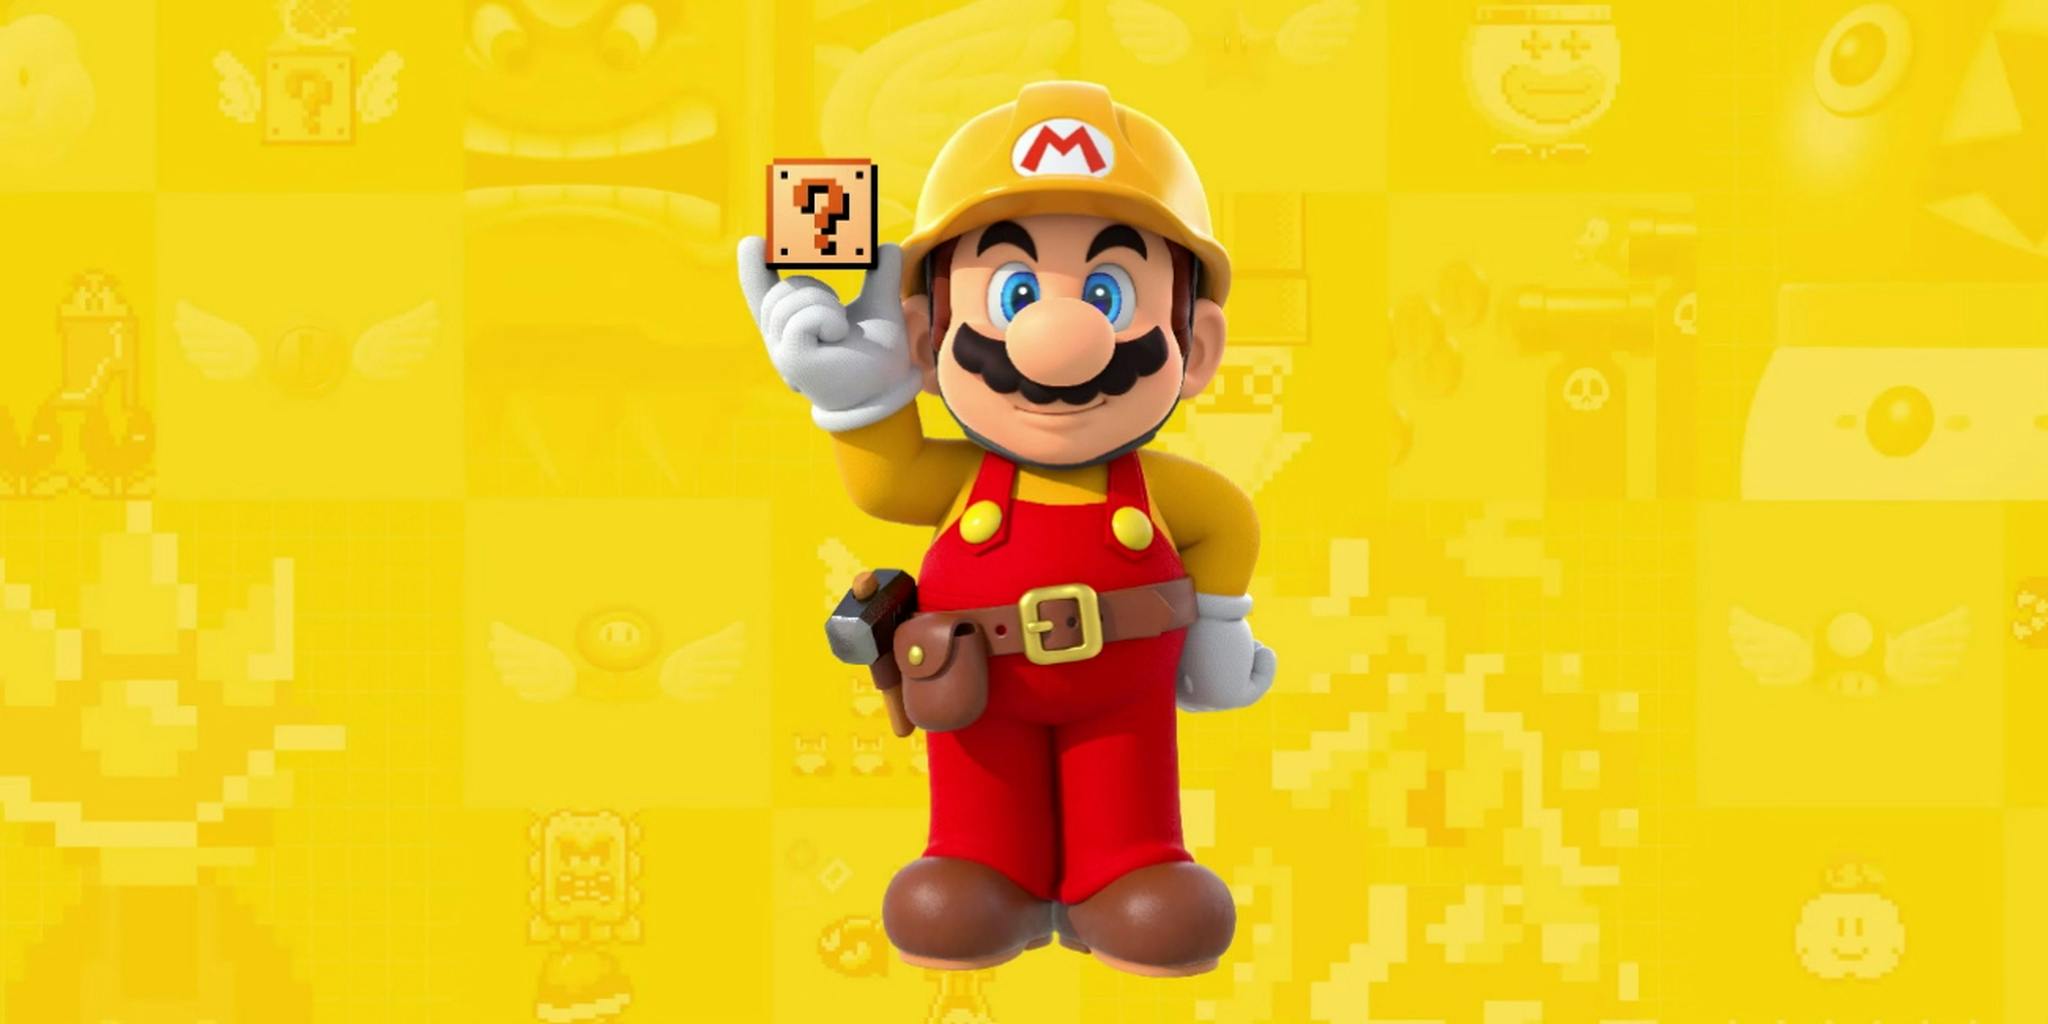 4 bizarrely existential levels of Super Mario Maker